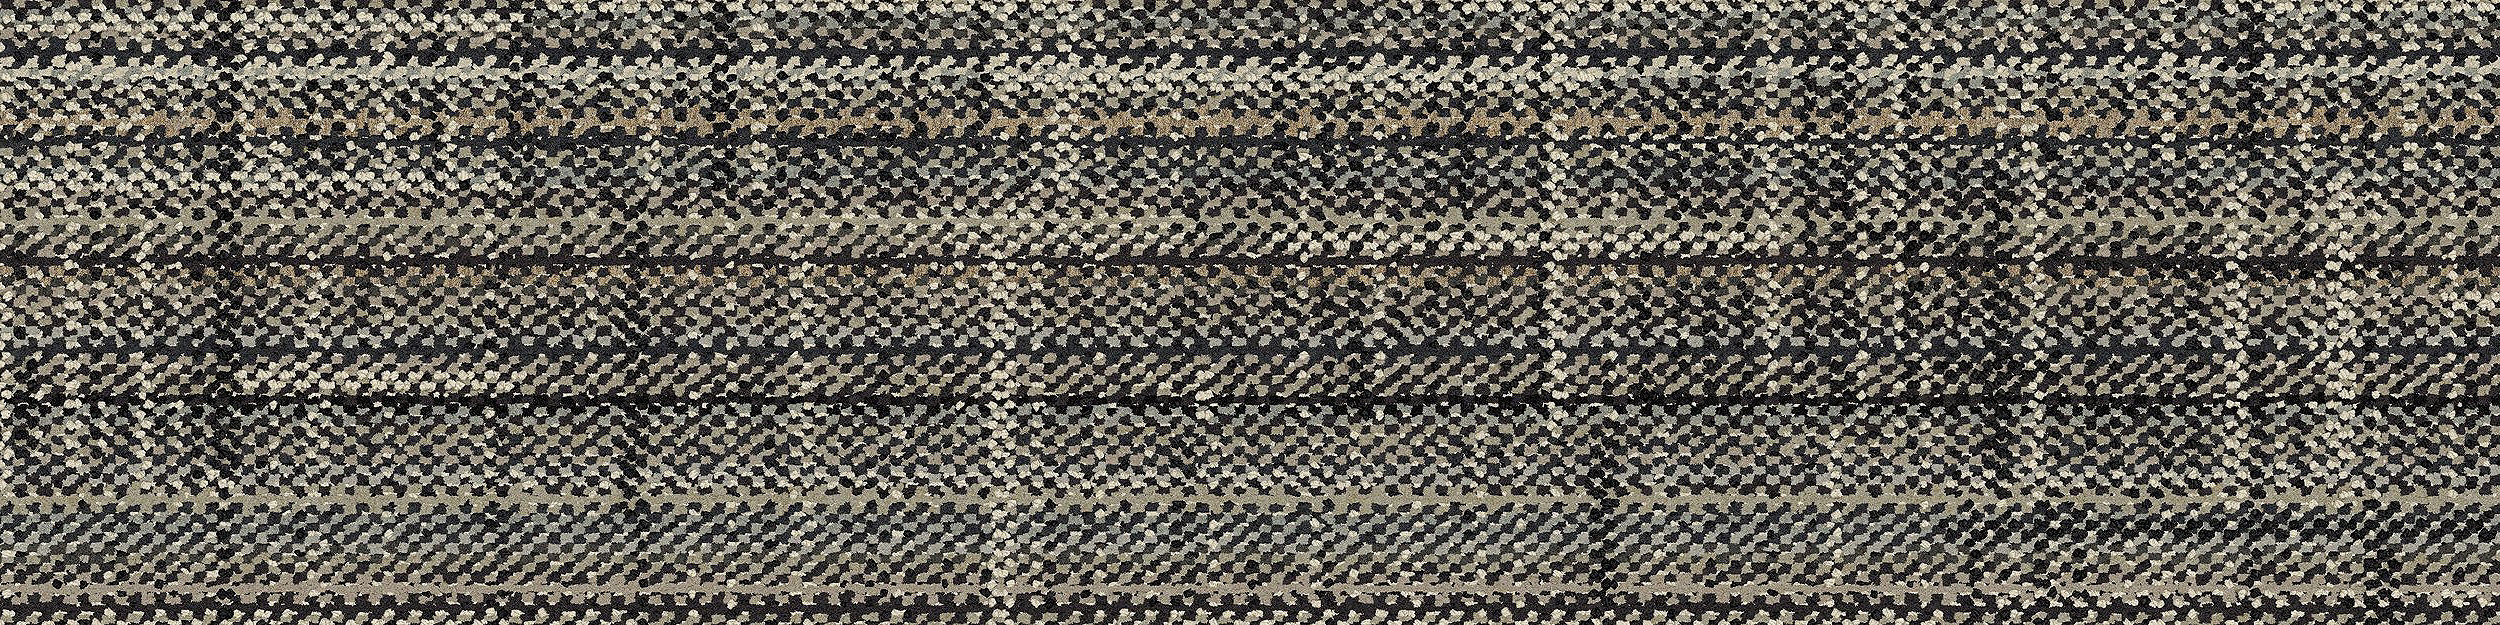 French Seams Carpet Tile In Chantilly numéro d’image 6